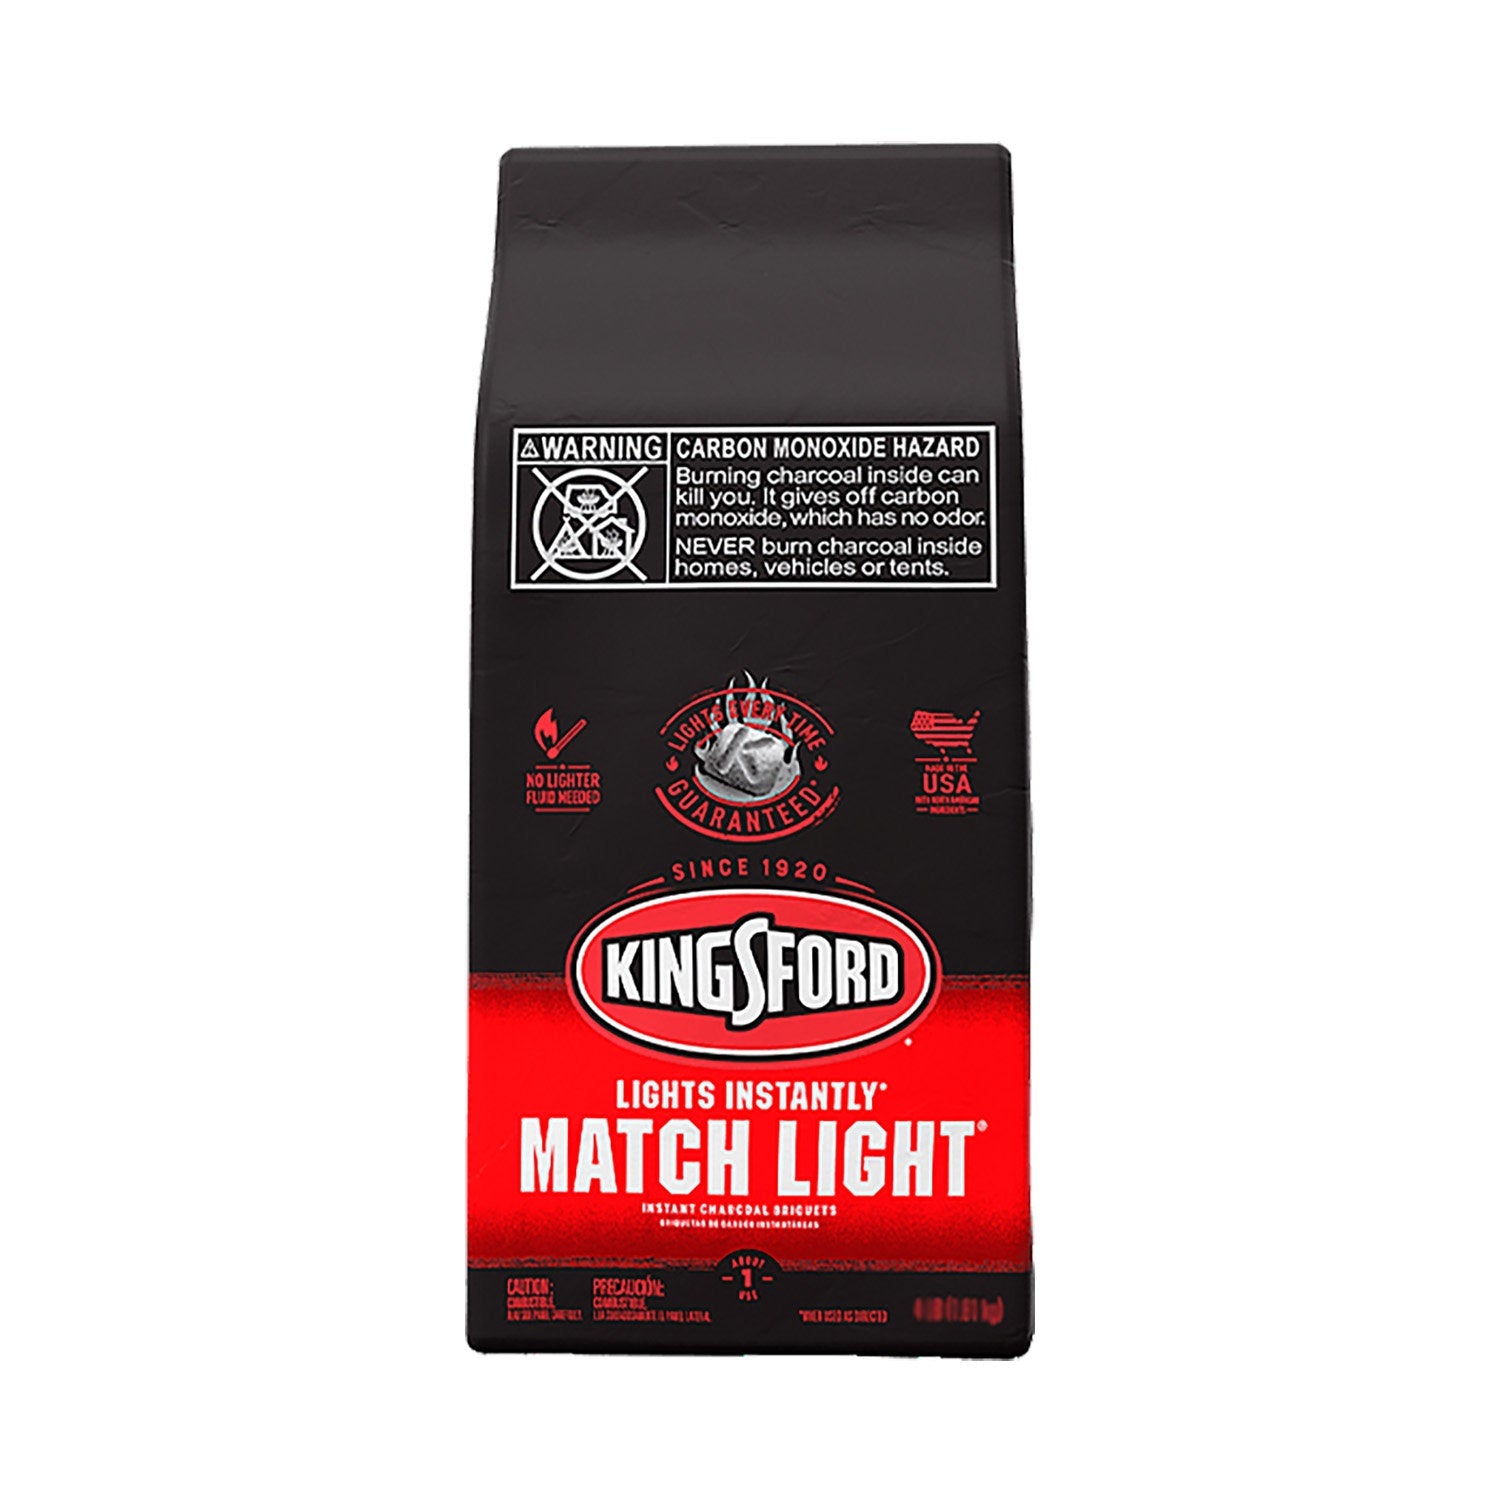 Kingsford Match Light Charcoal Briquets 12lb